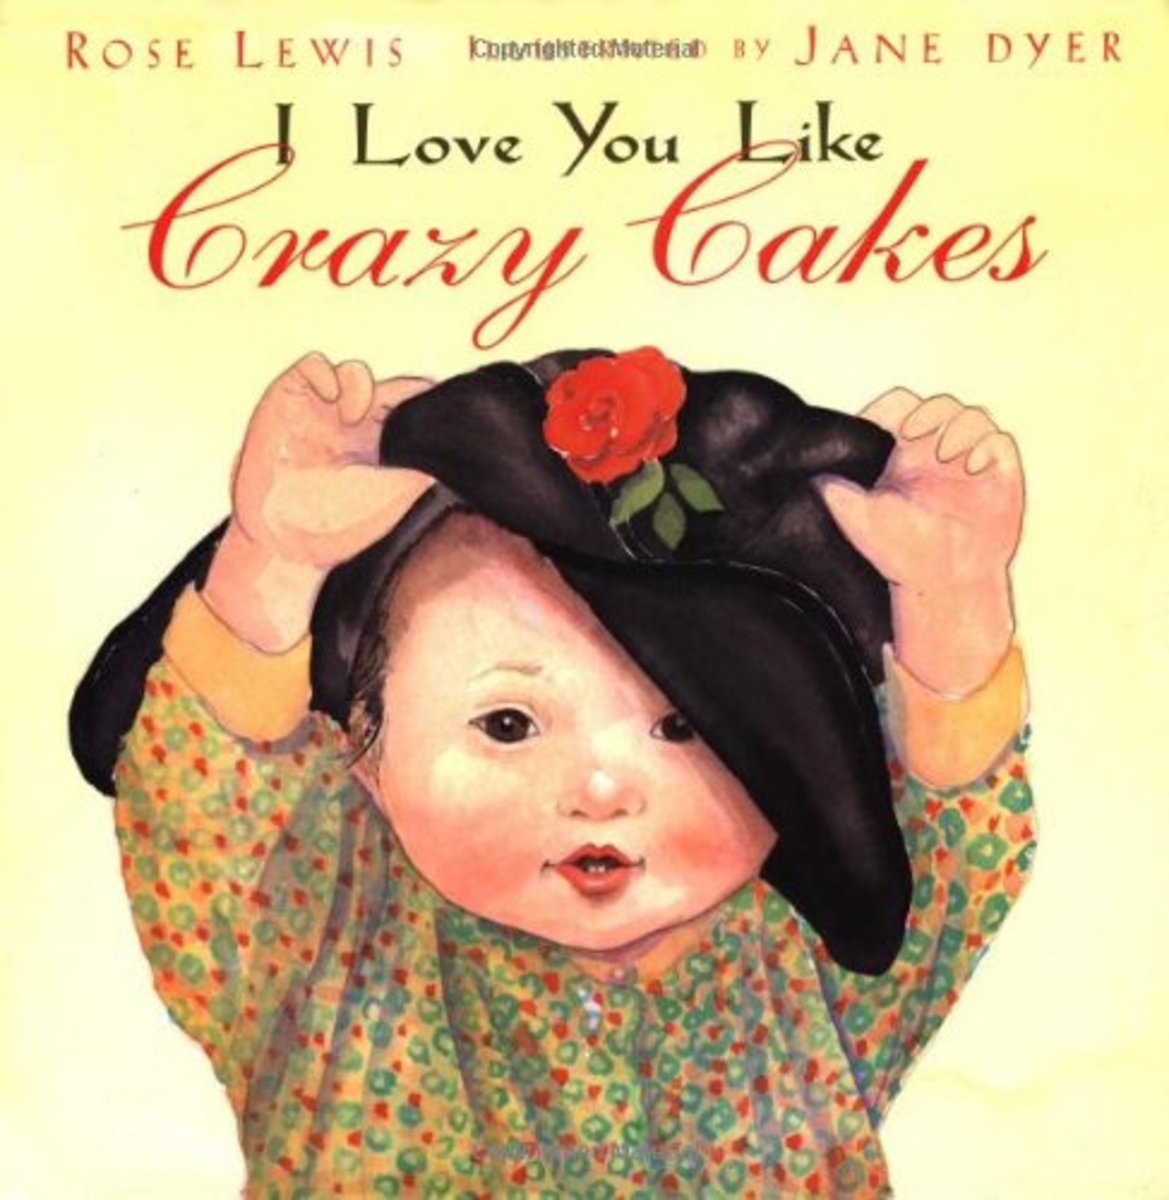 I Love You Like Crazy Cakes